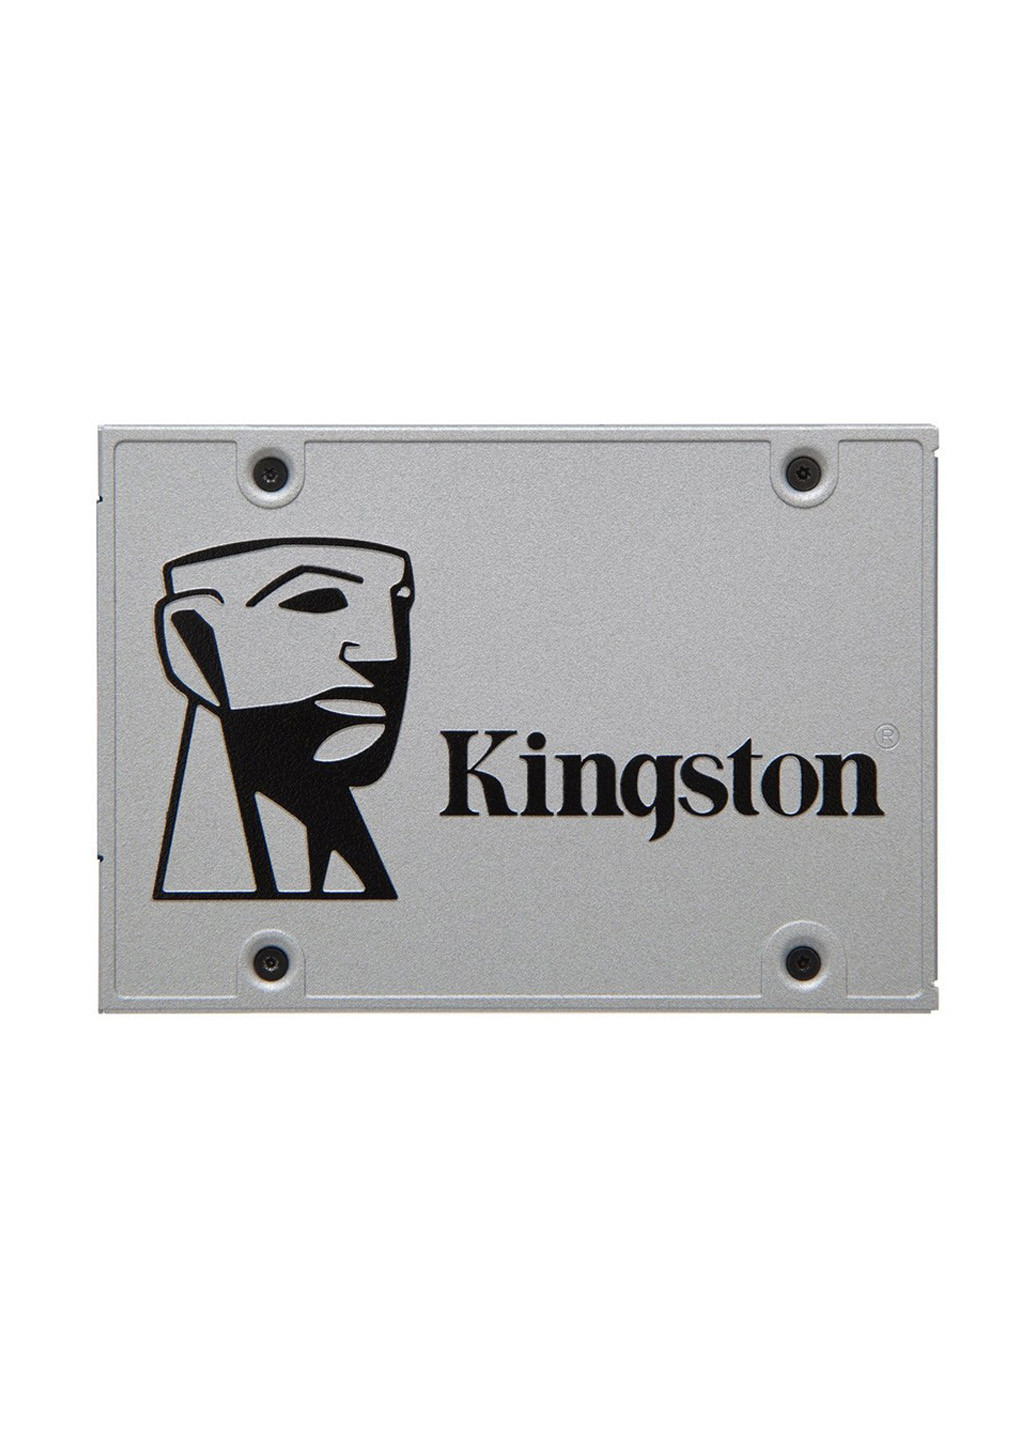 Внутренний SSD UV500 Upgrade Kit 120GB 2.5" SATAIII 3D NAND TLC (SUV500B/120G) Kingston внутренний ssd kingston uv500 upgrade kit 120gb 2.5" sataiii 3d nand tlc (suv500b/120g) (136894028)